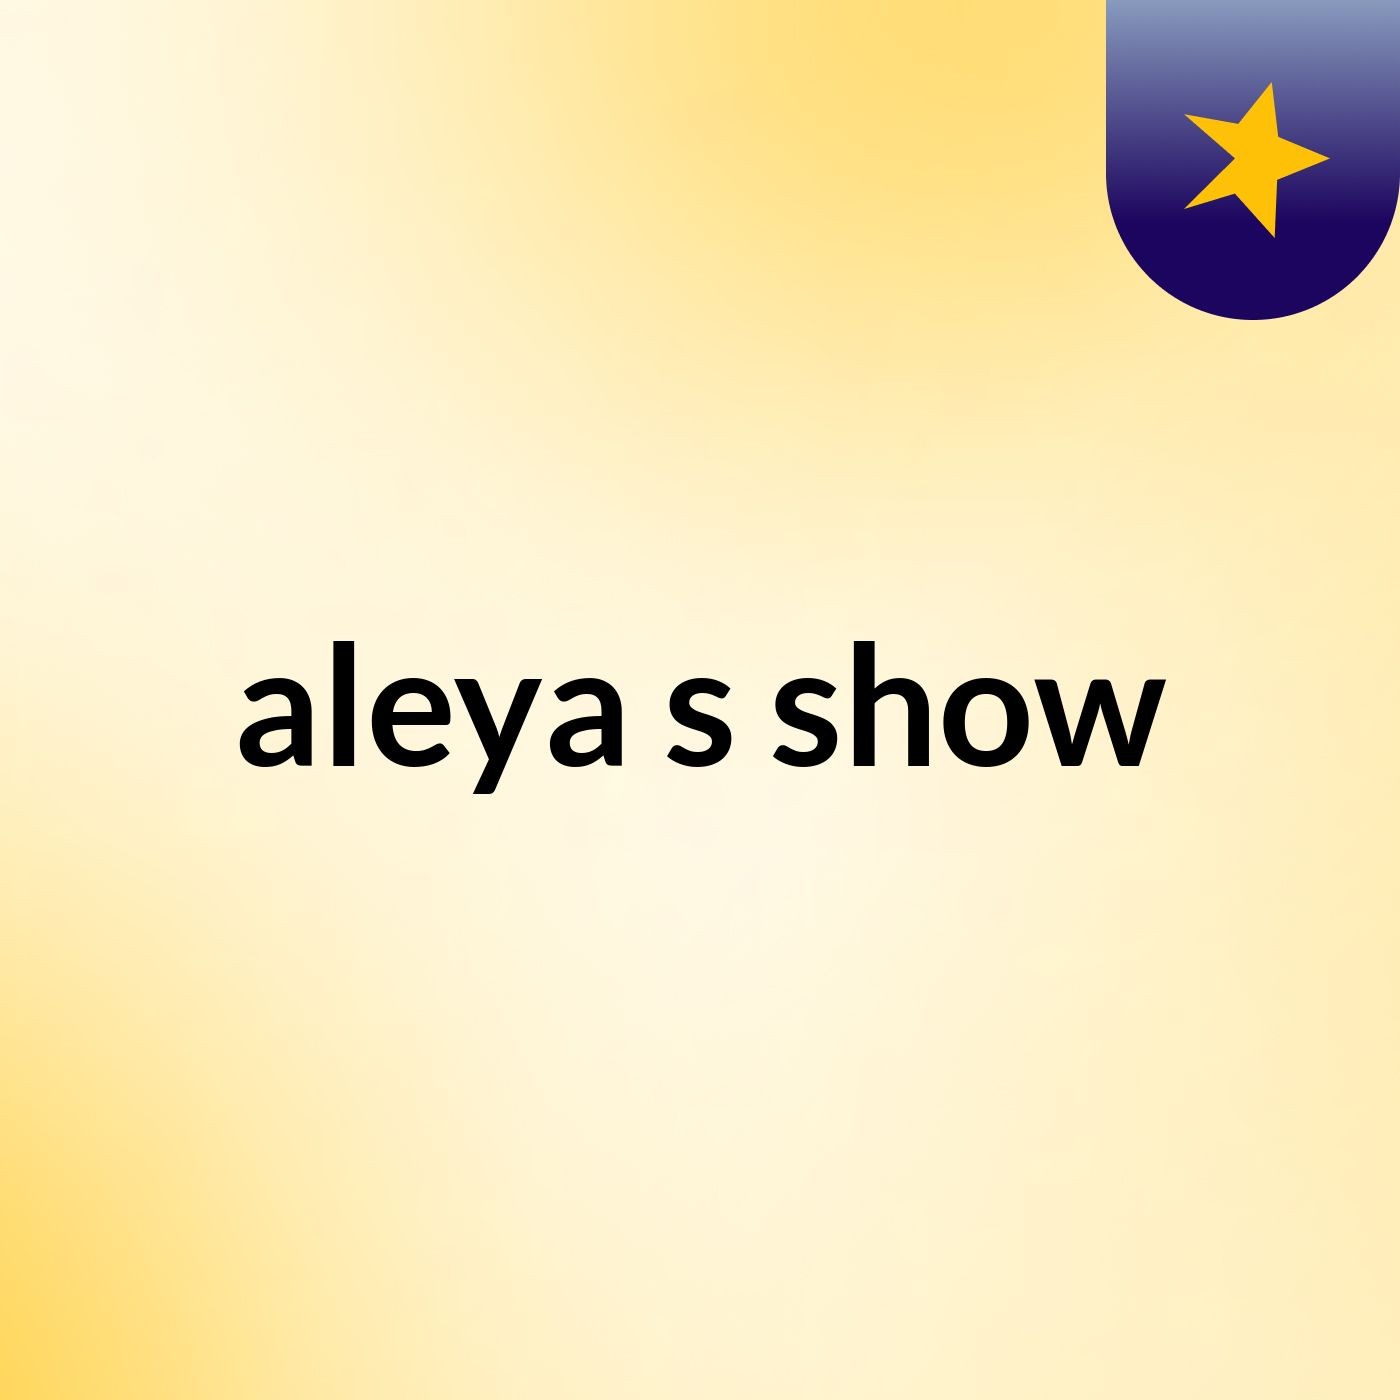 aleya's show